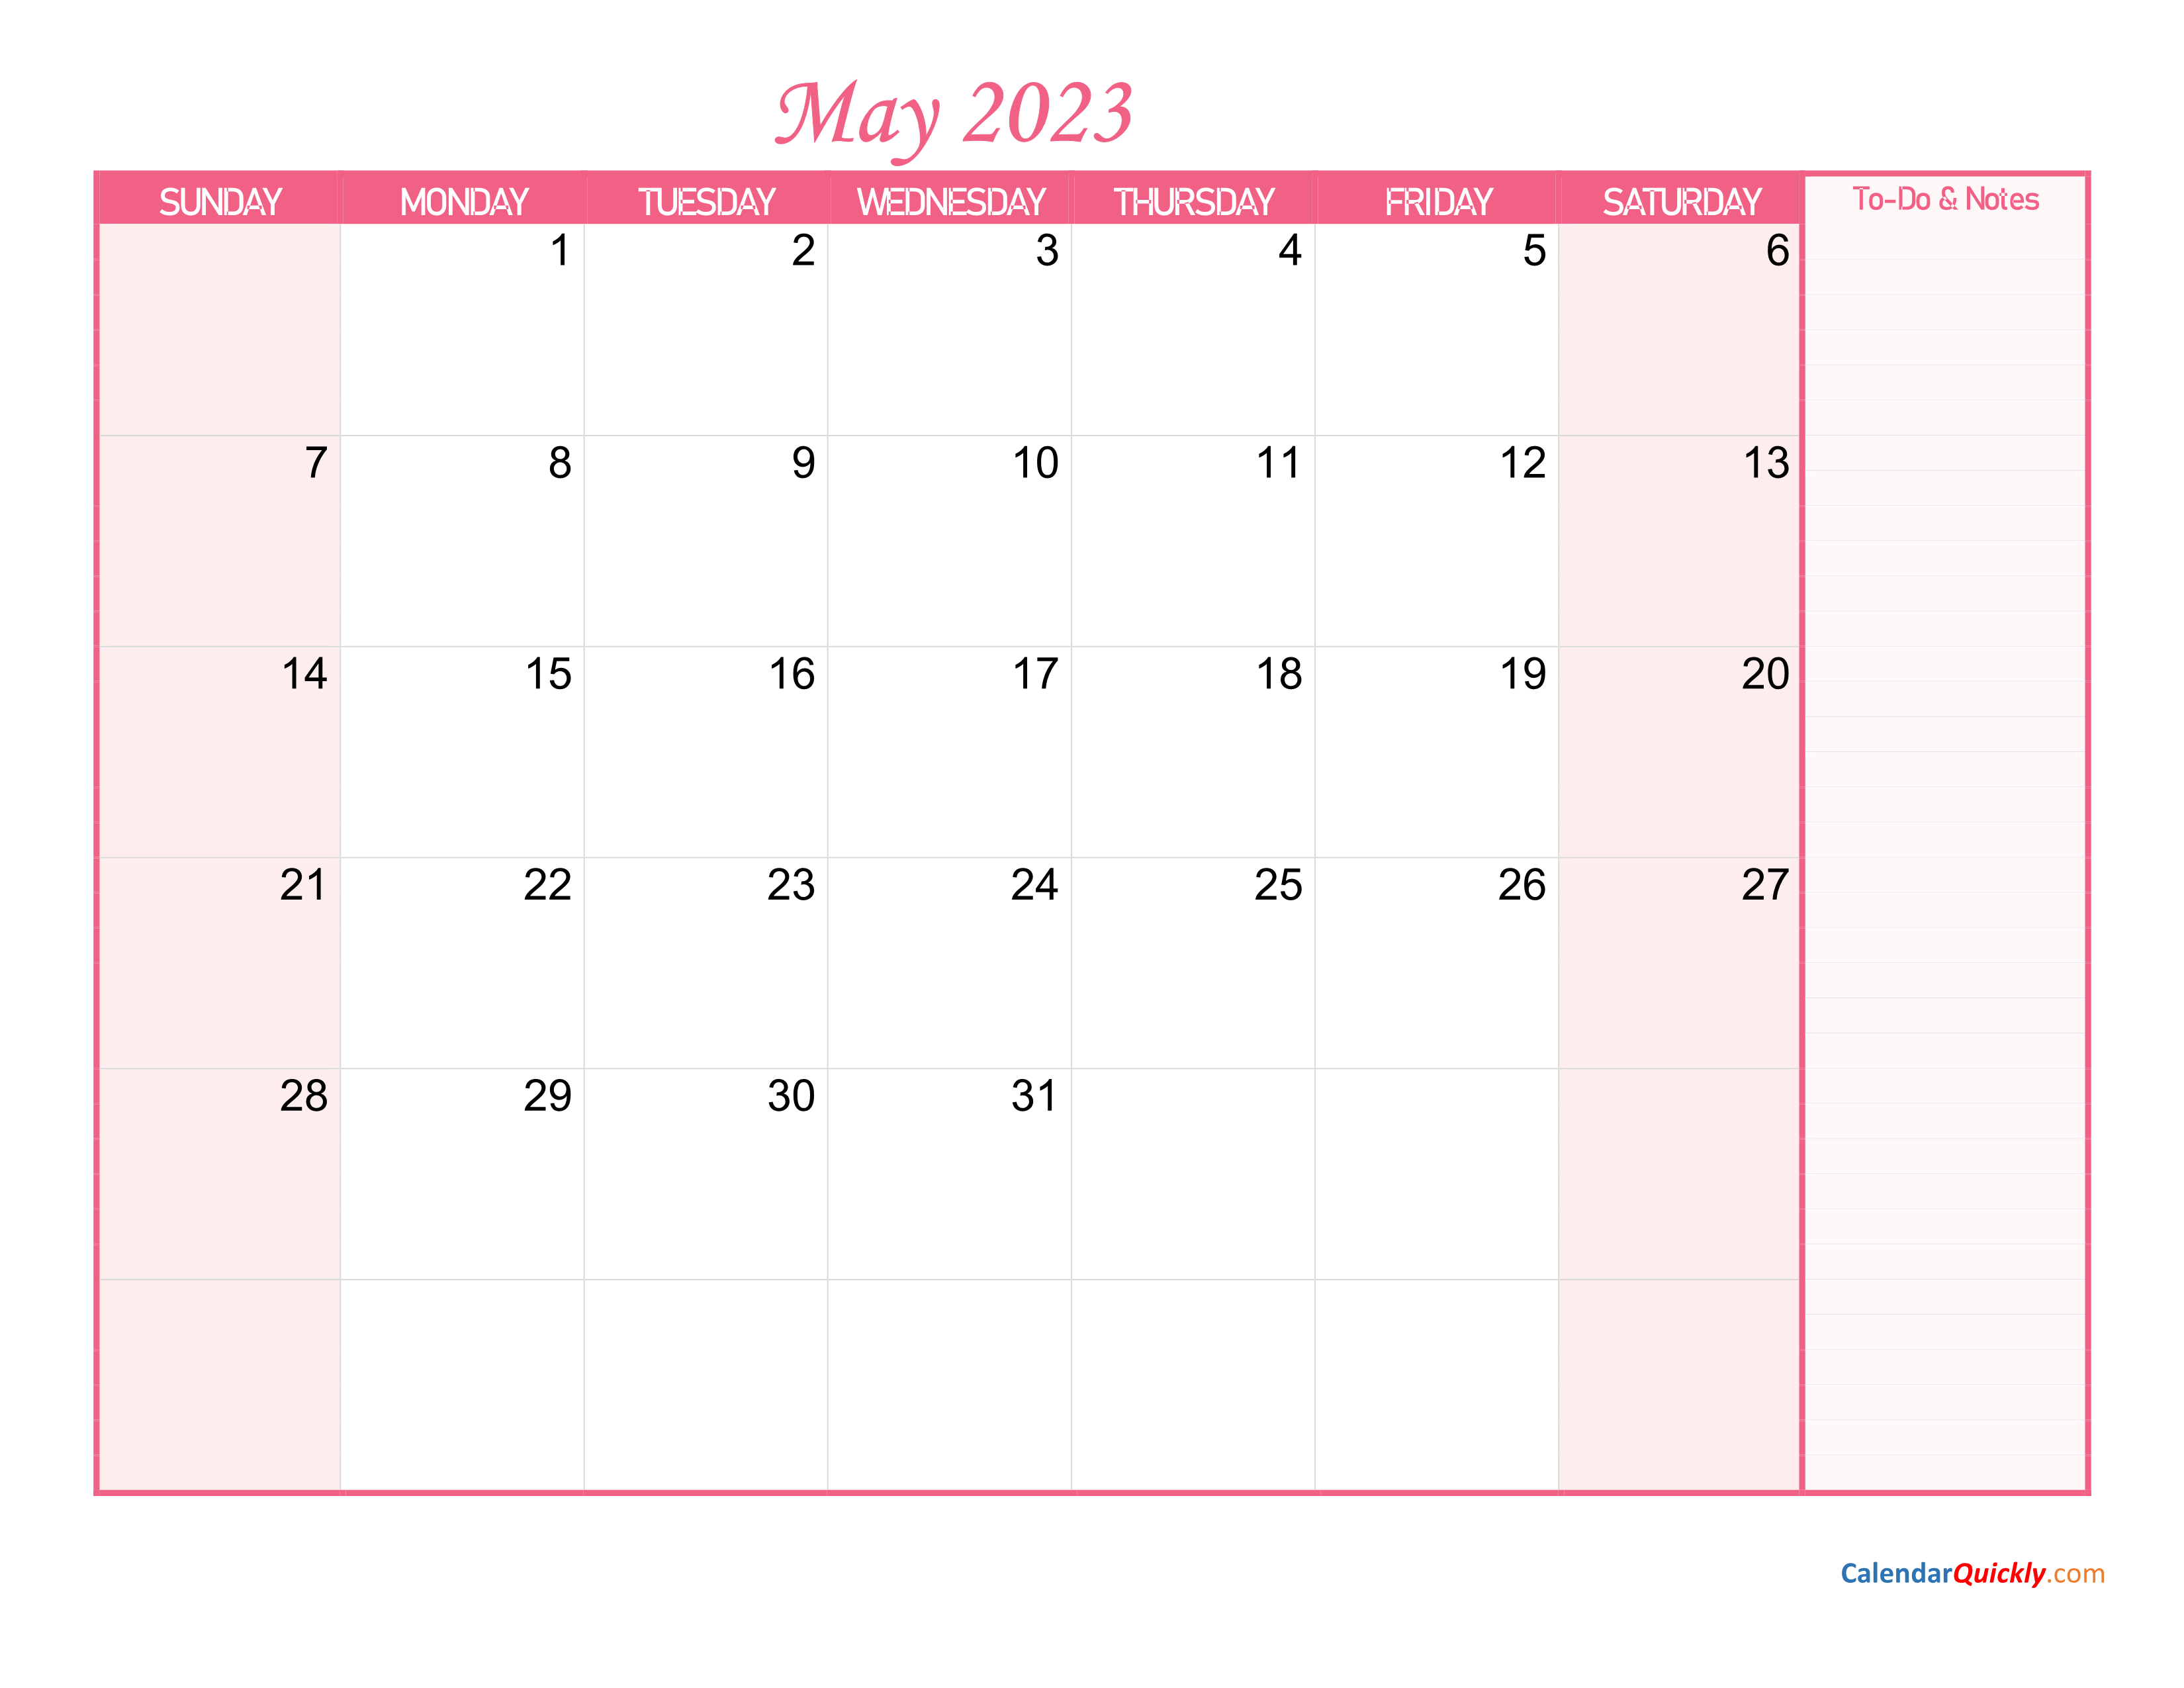 Календарь февраль март 2024 г. Календарь на 2022 год февраль месяц. Календарь 2022 с заметками. Календарь ноябрь 2022. План календарь на 2022.